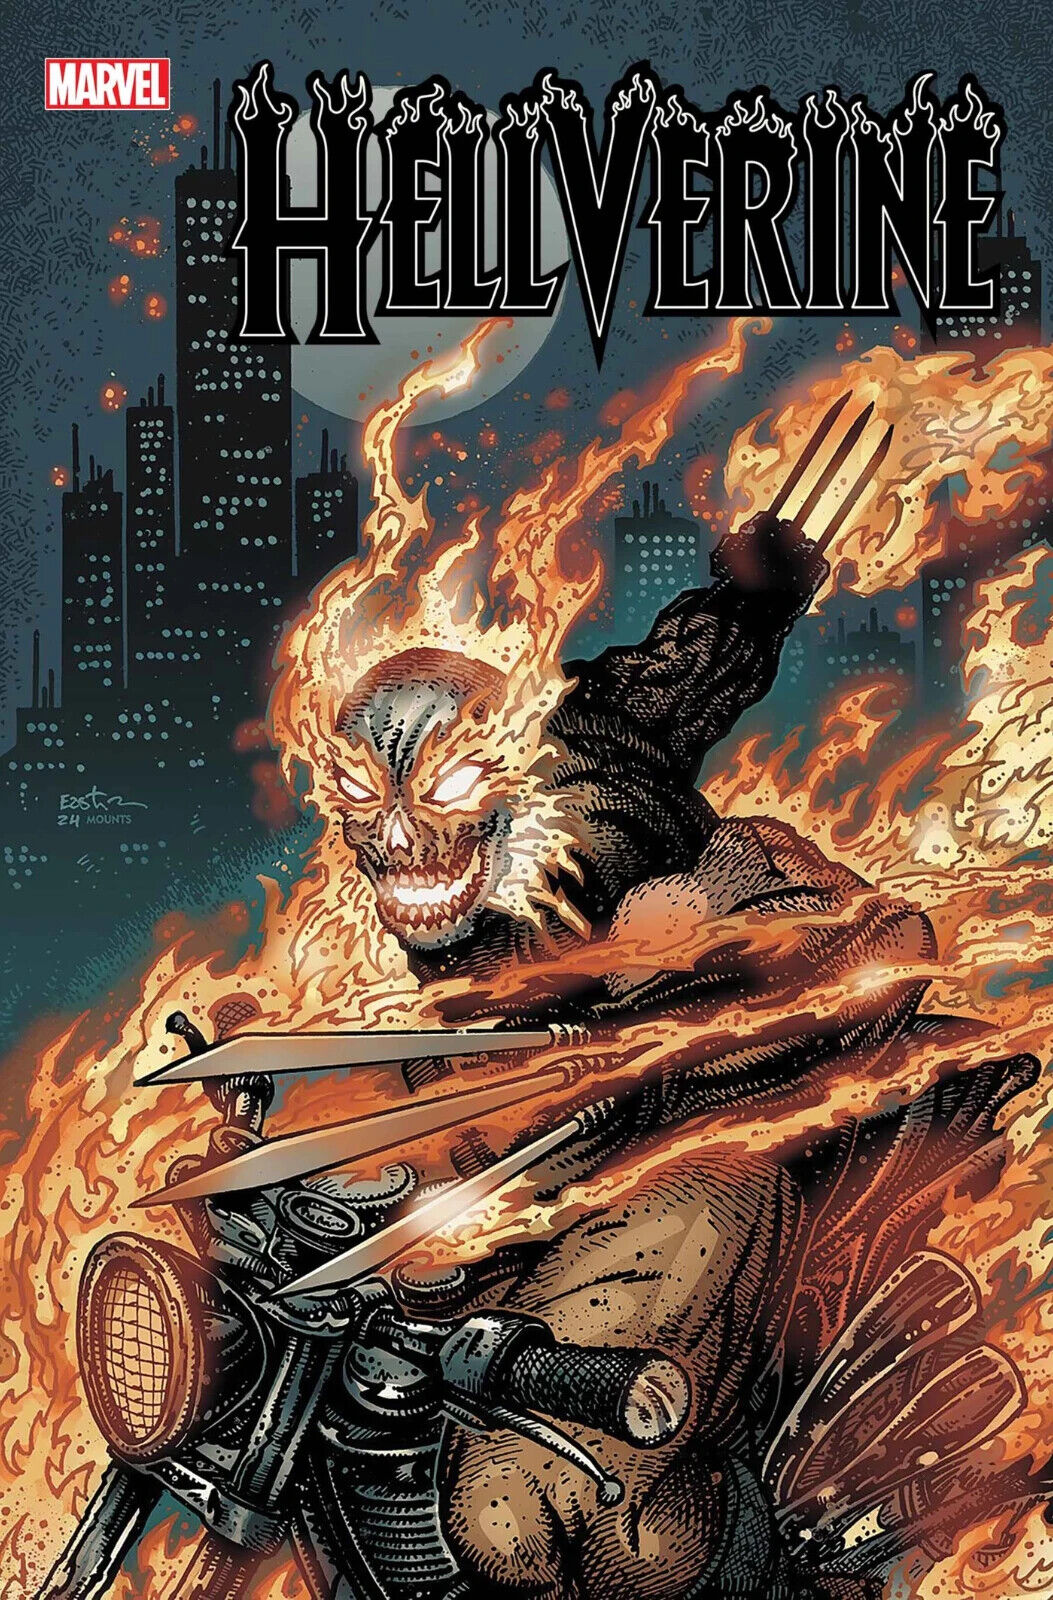 HELLVERINE #1 (KEVIN EASTMAN VARIANT) ~ Ghost Rider Wolverine Dakon